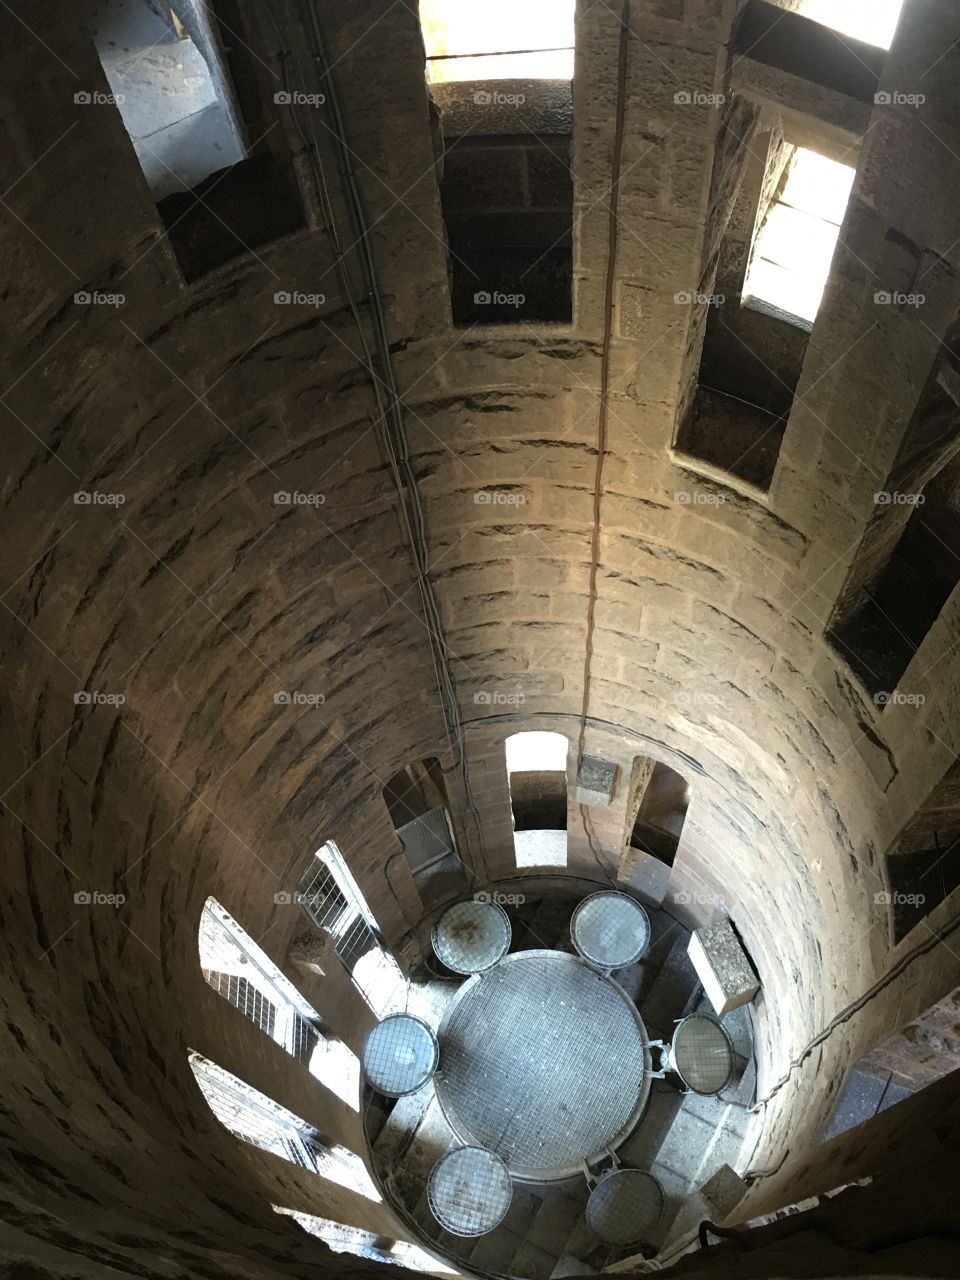 One part of the Sagrada Familia tower